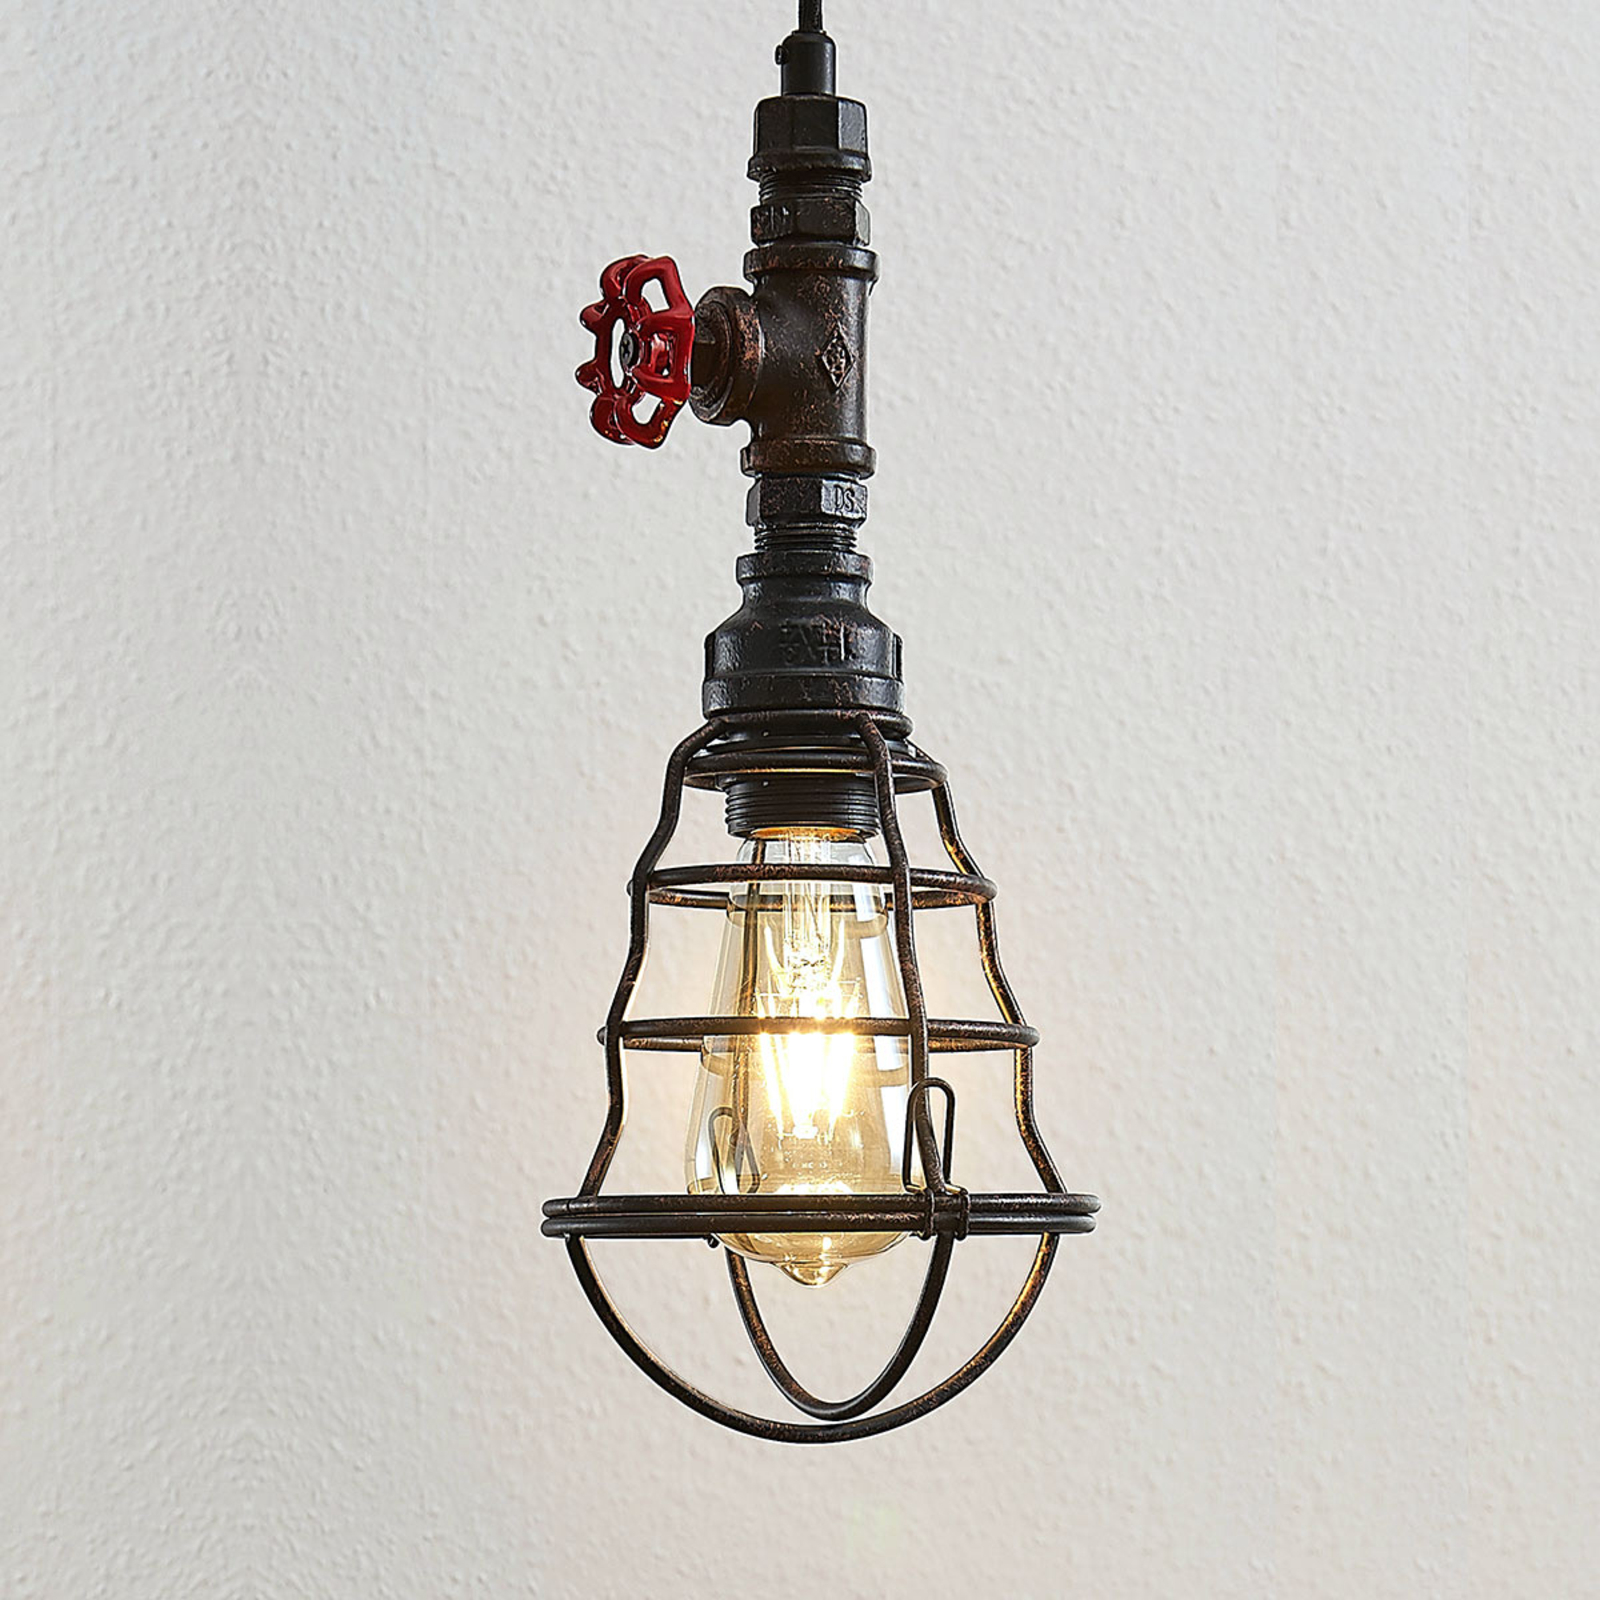 Josip pendant light, 1-bulb